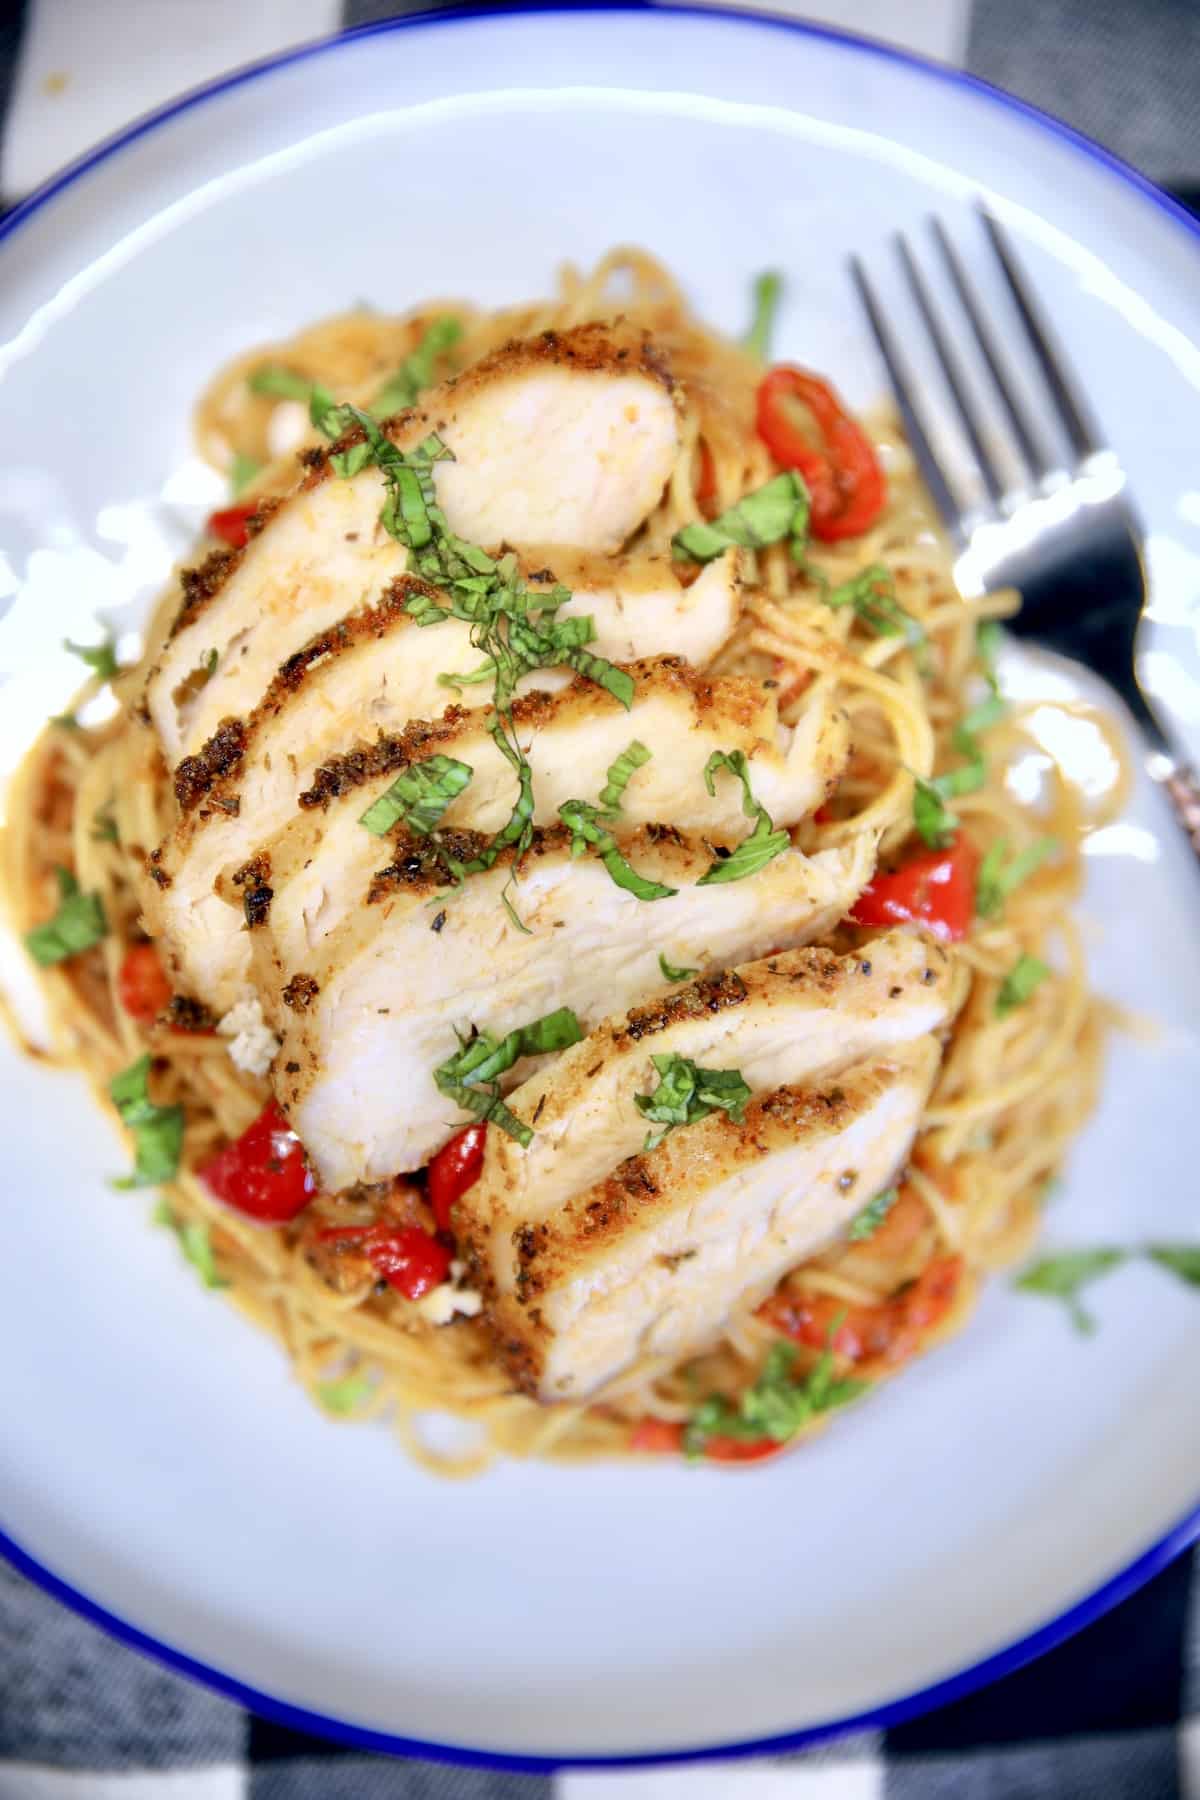 Closeup of plate of chicken spaghetti.